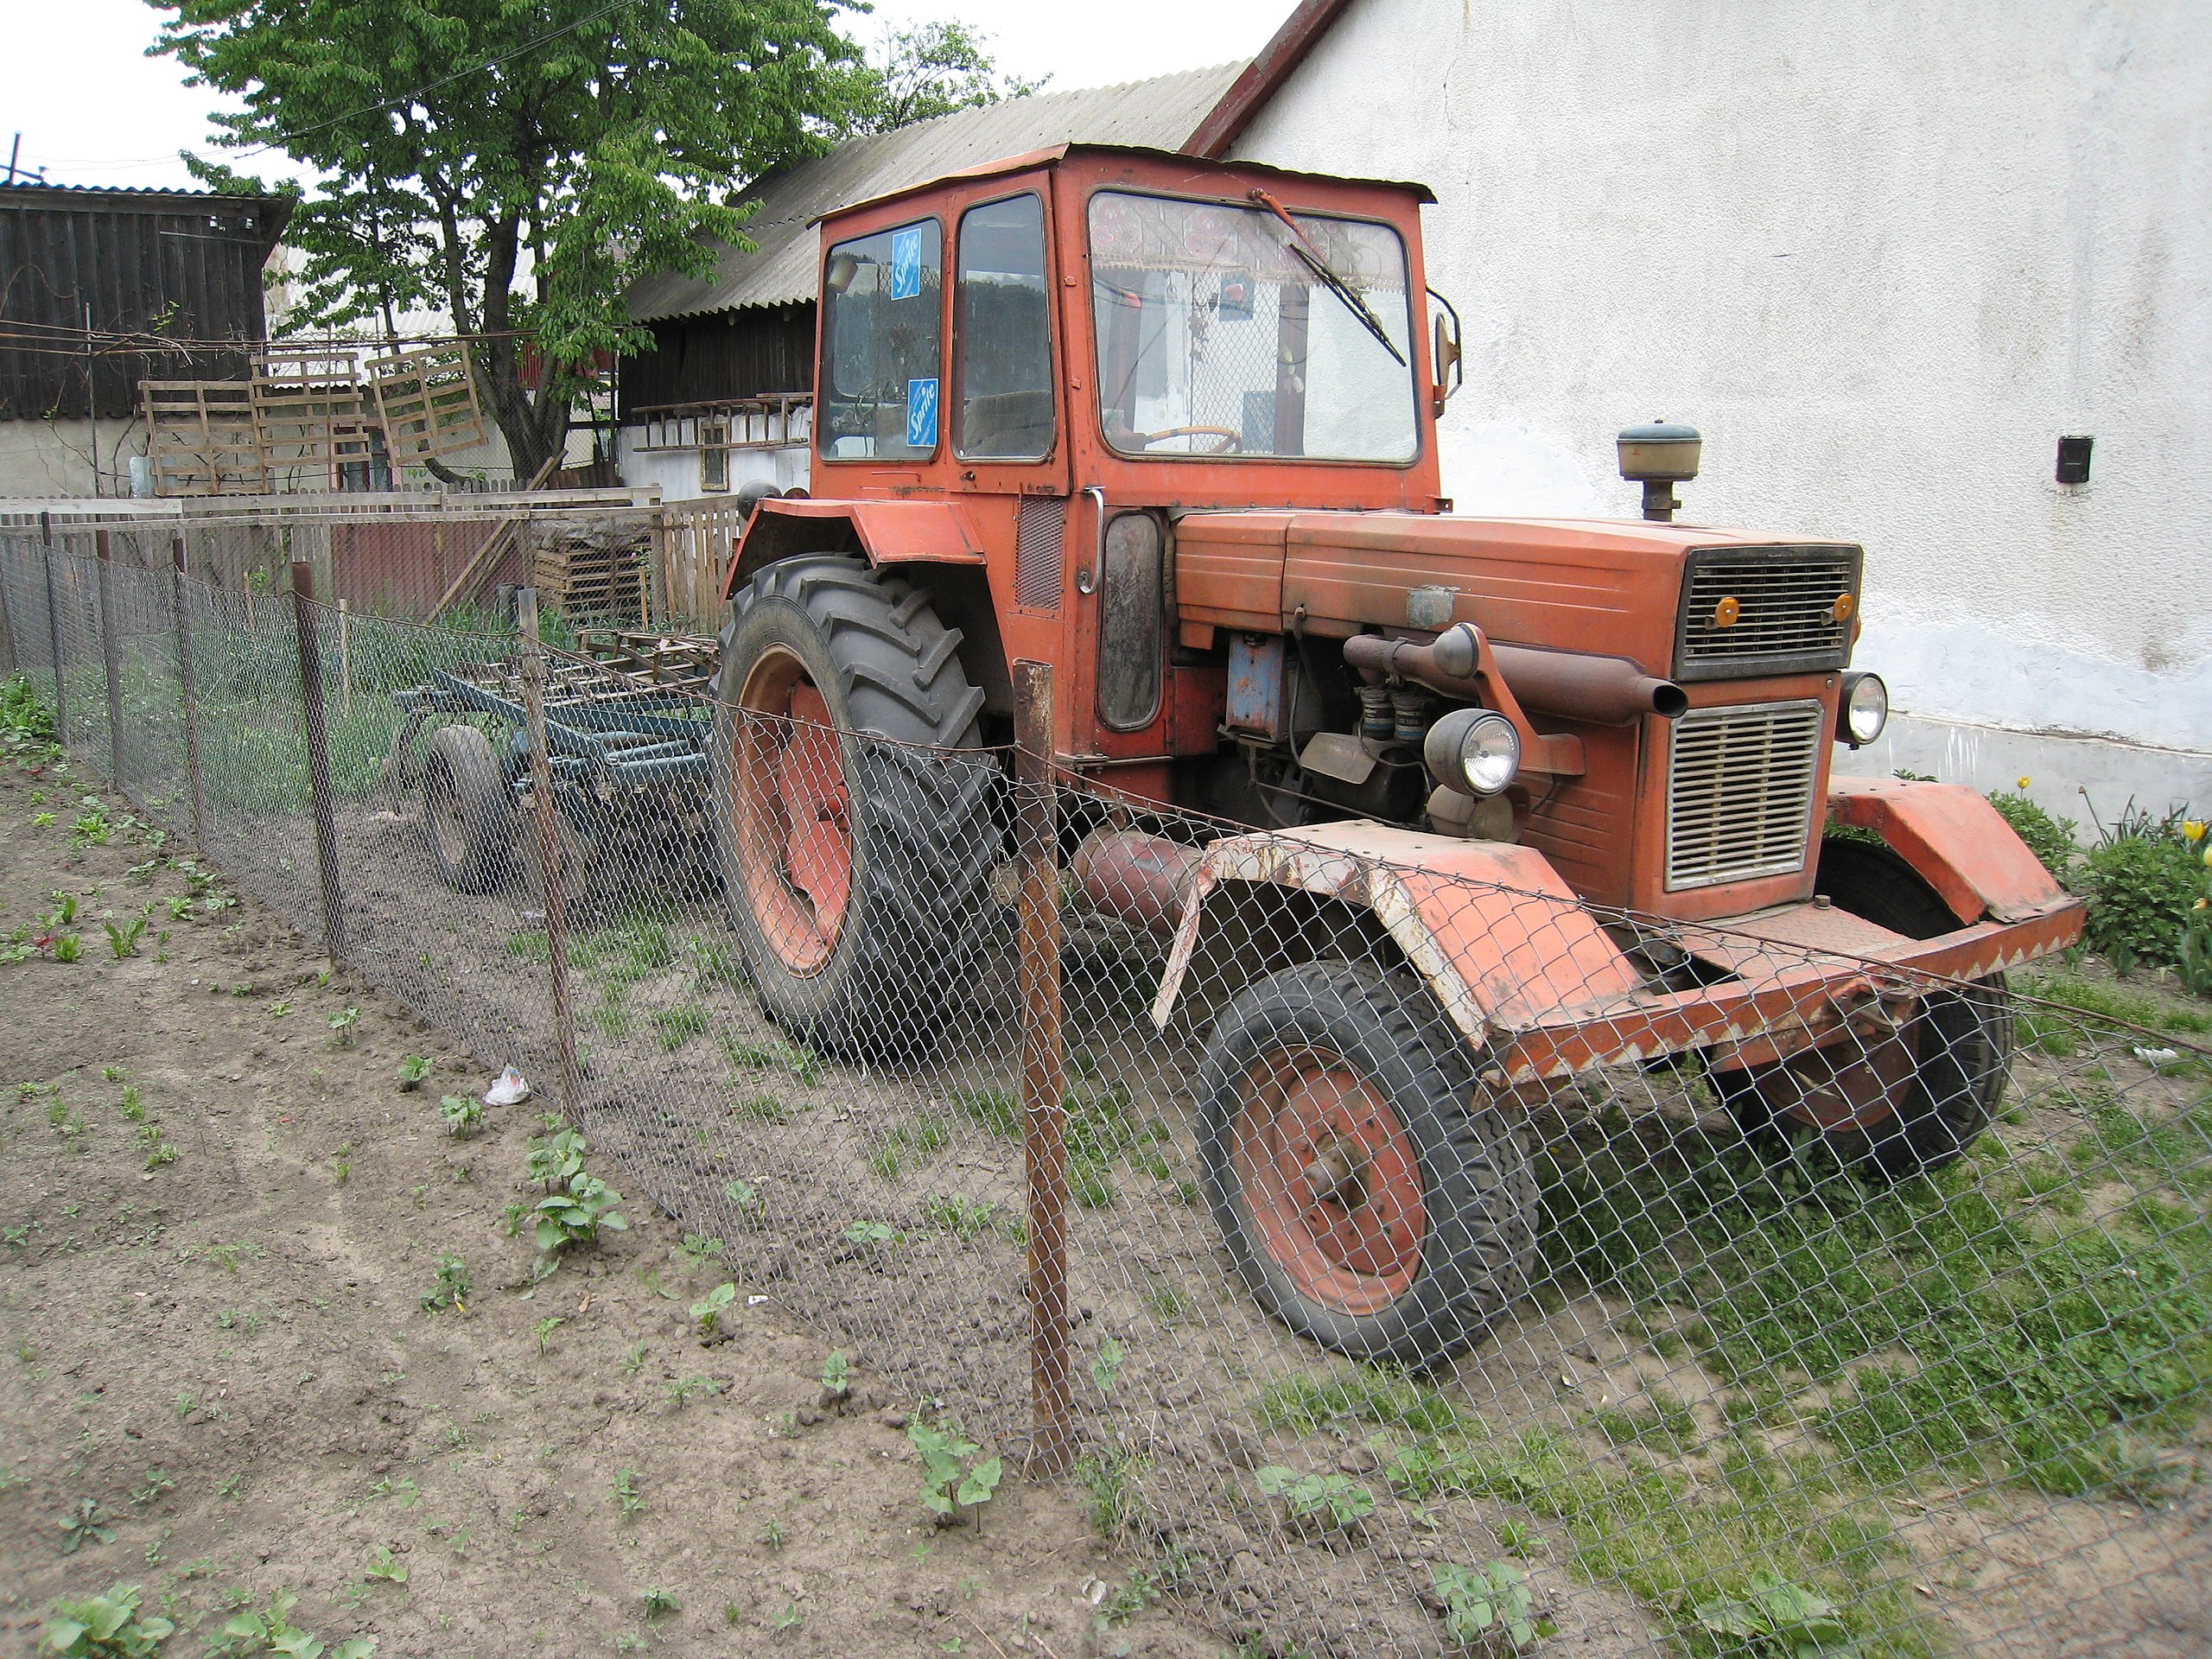 File:UTB tractor somewhere in Romania.jpg - Wikimedia Commons